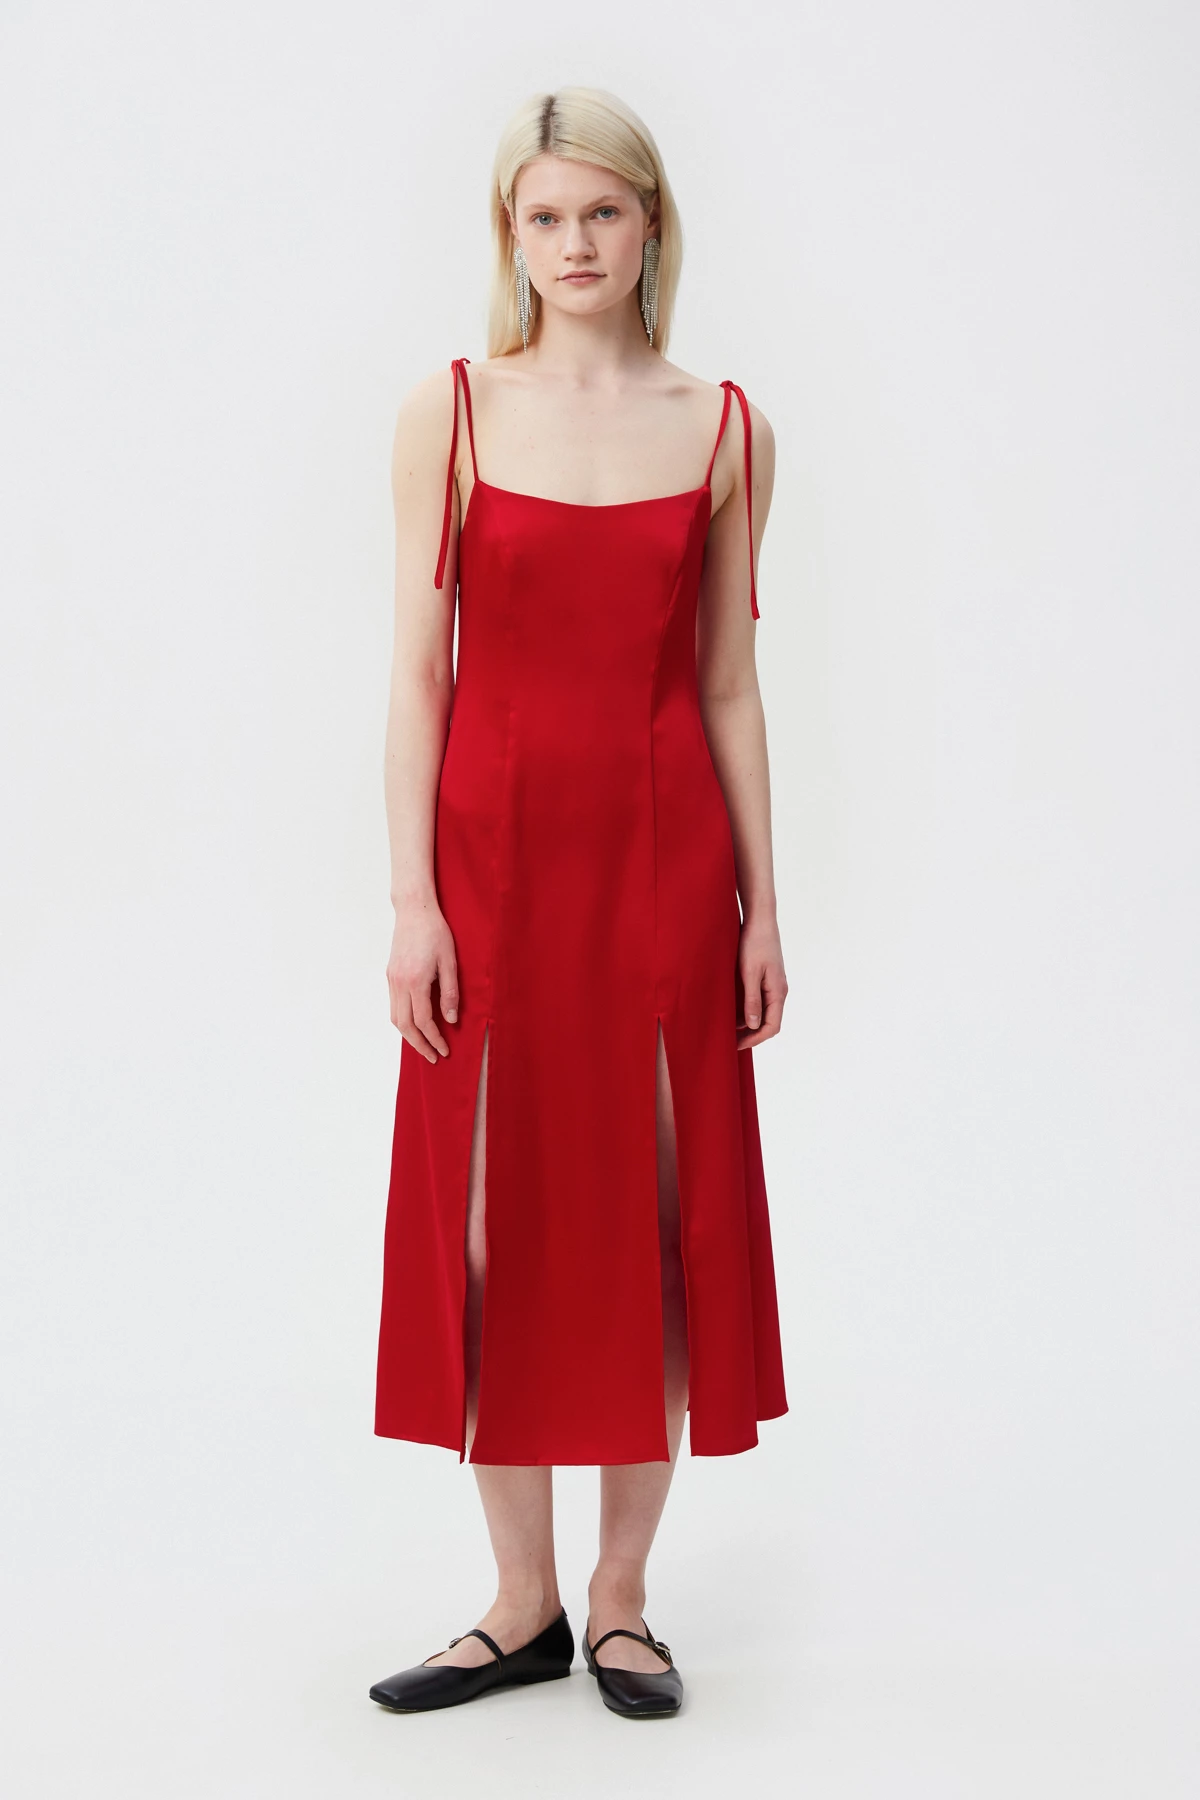 Red satin midi dress with leg slit, photo 1